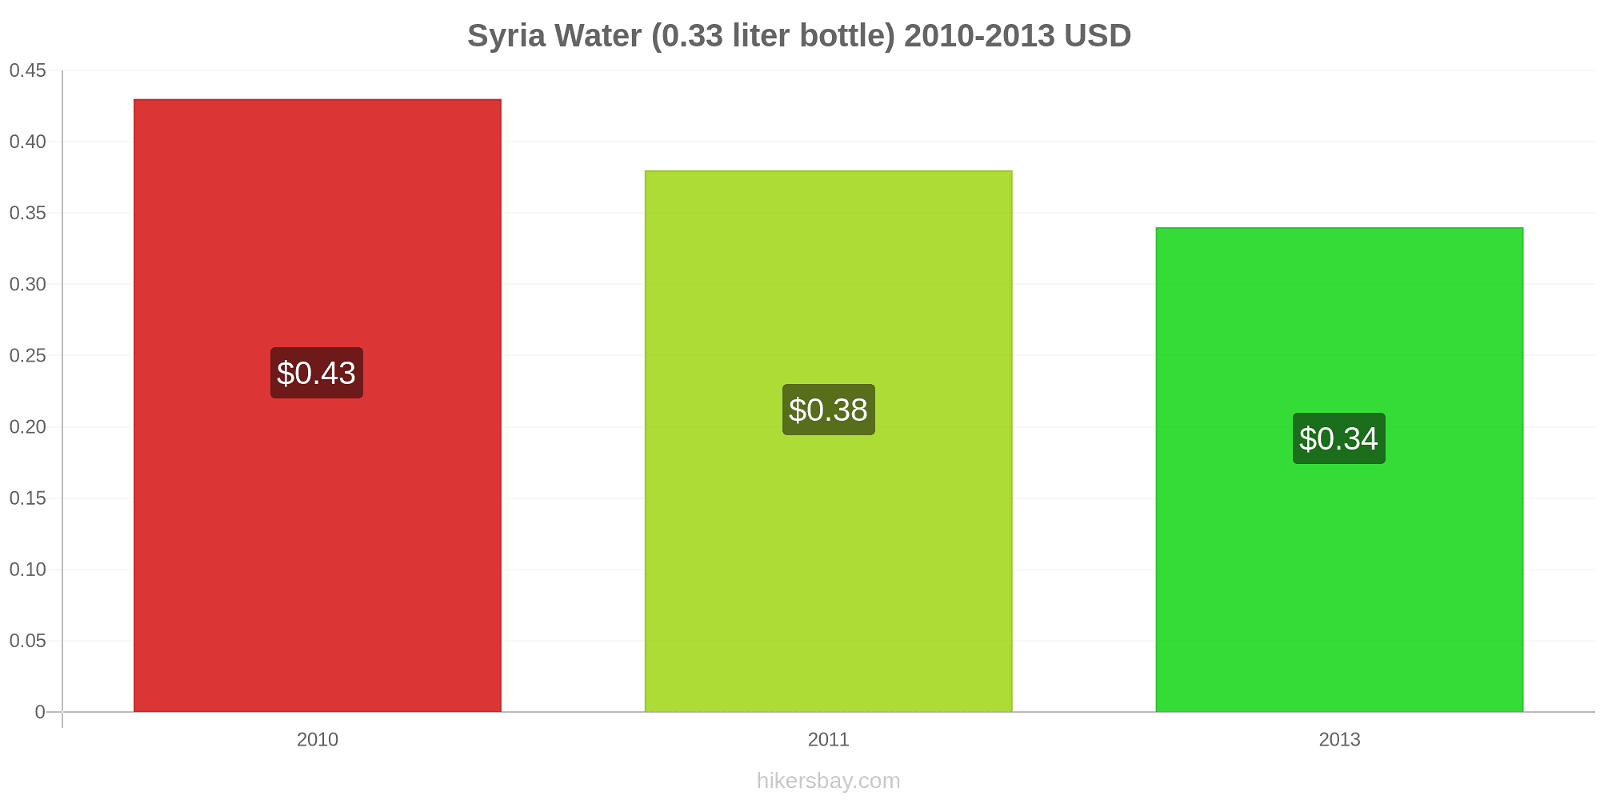 Syria price changes Water (0.33 liter bottle) hikersbay.com